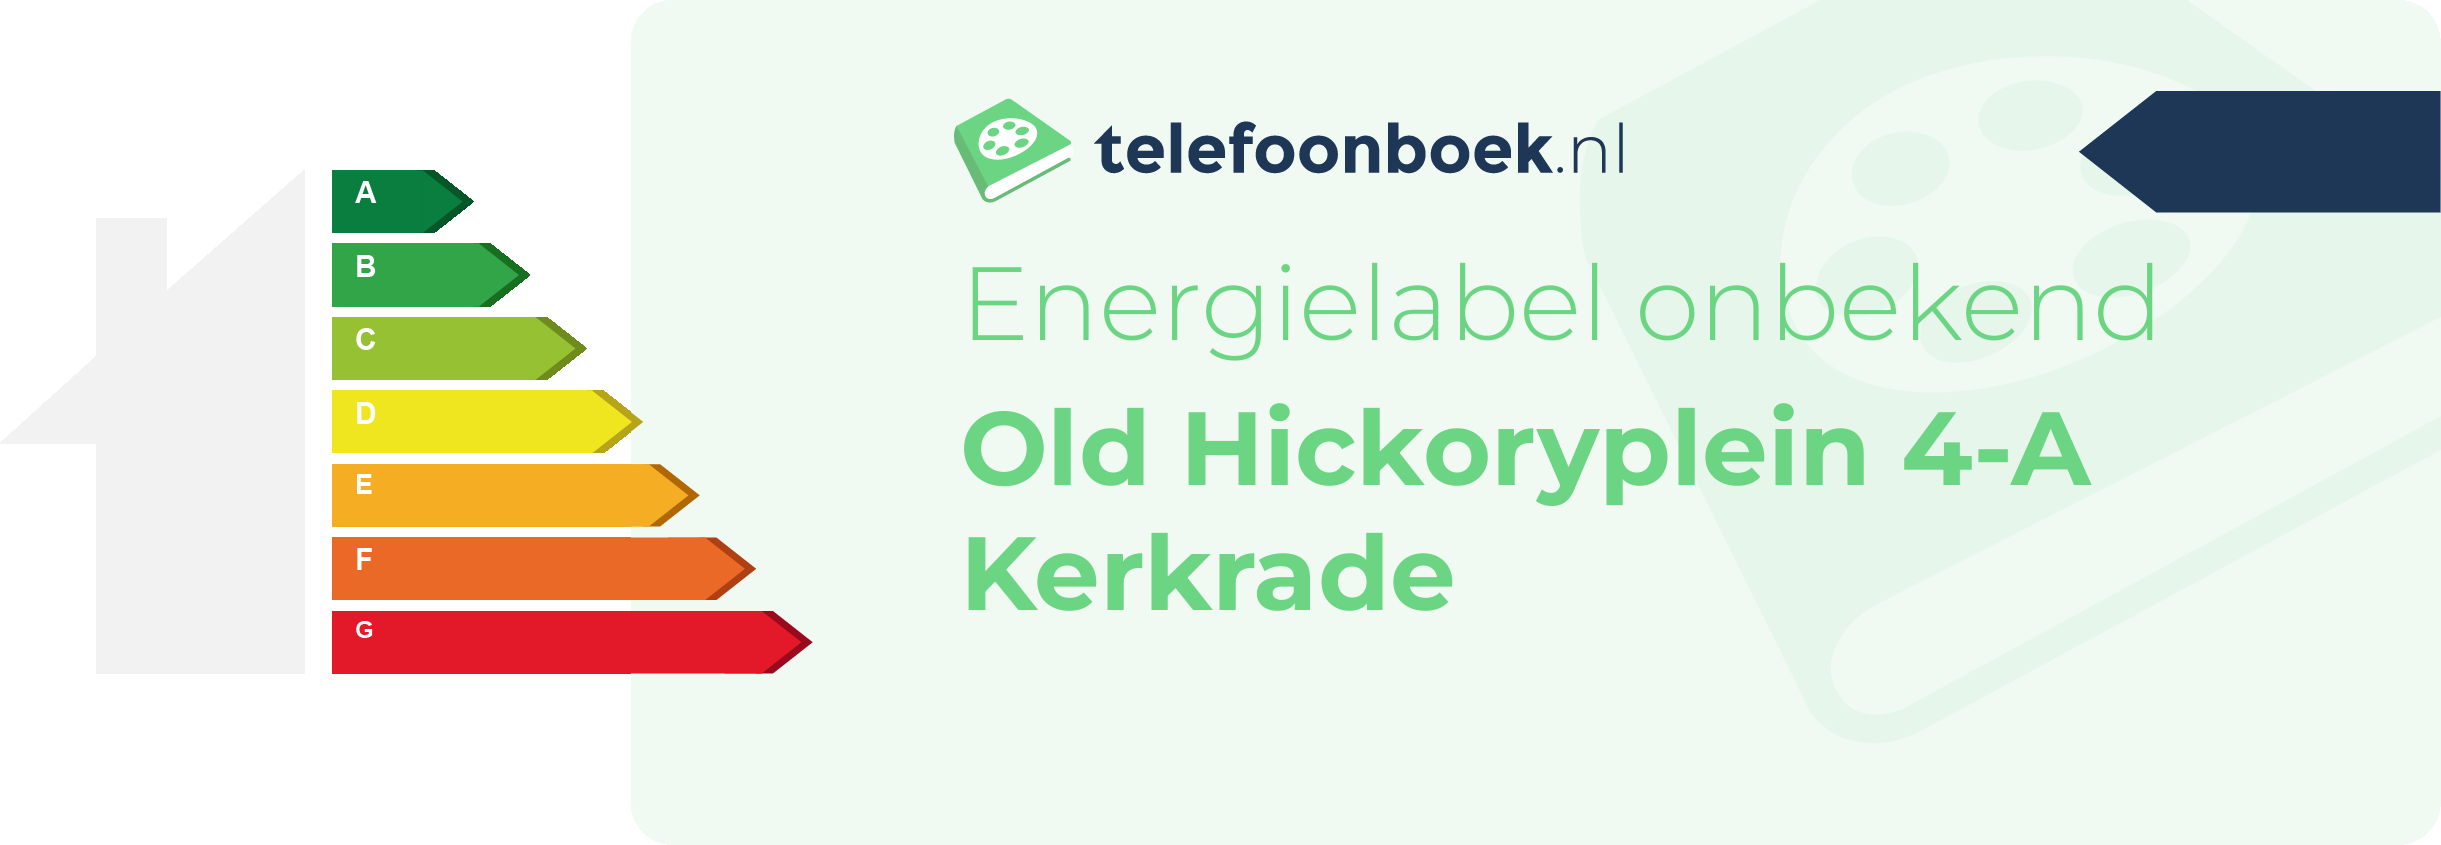 Energielabel Old Hickoryplein 4-A Kerkrade